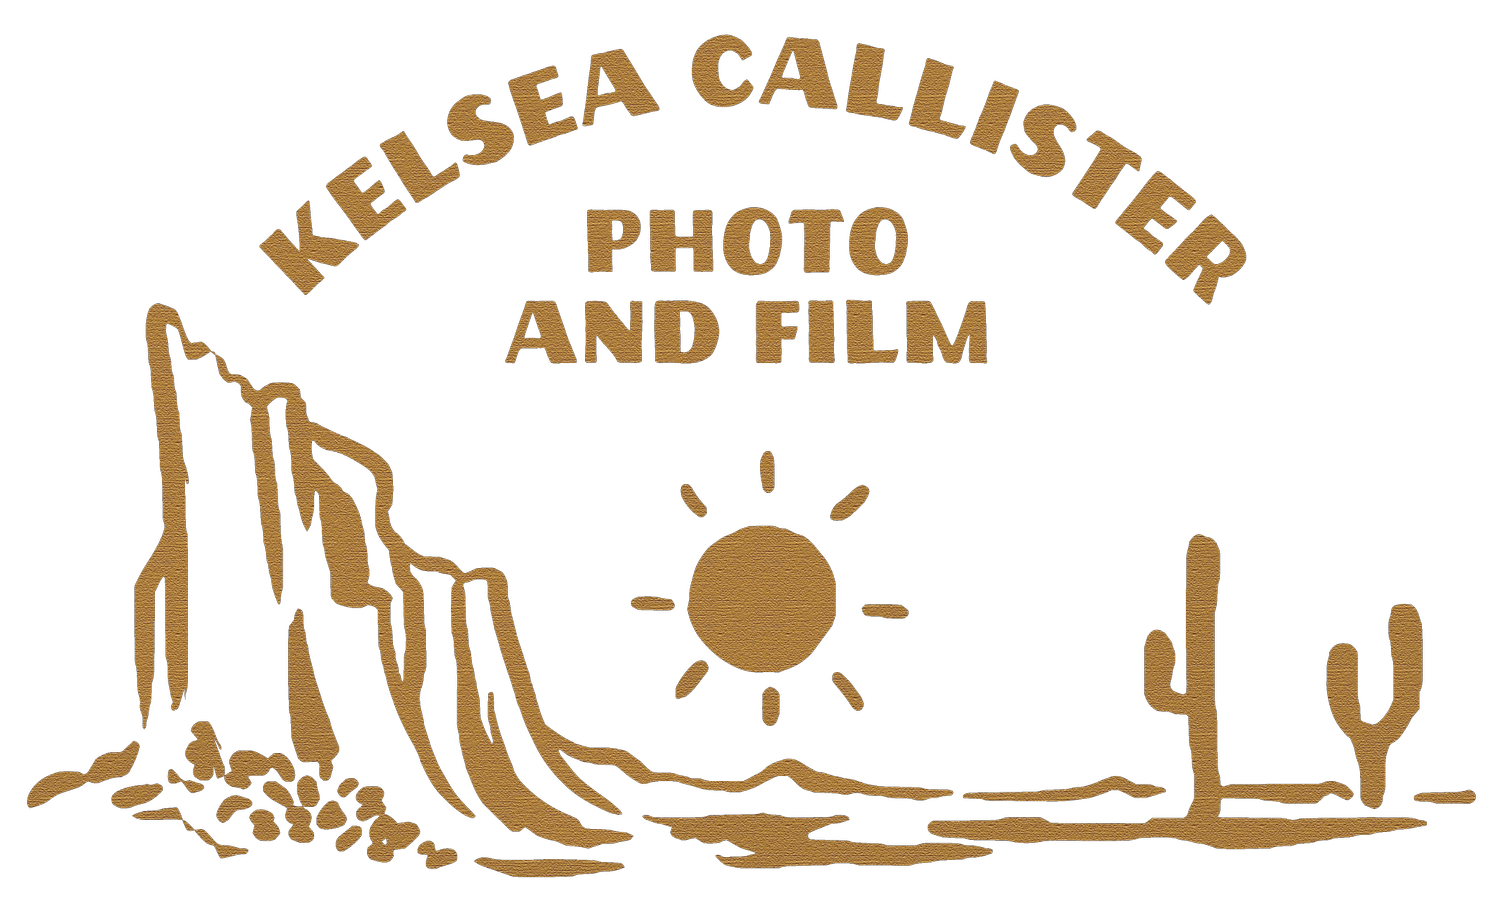 Kelsea Callister